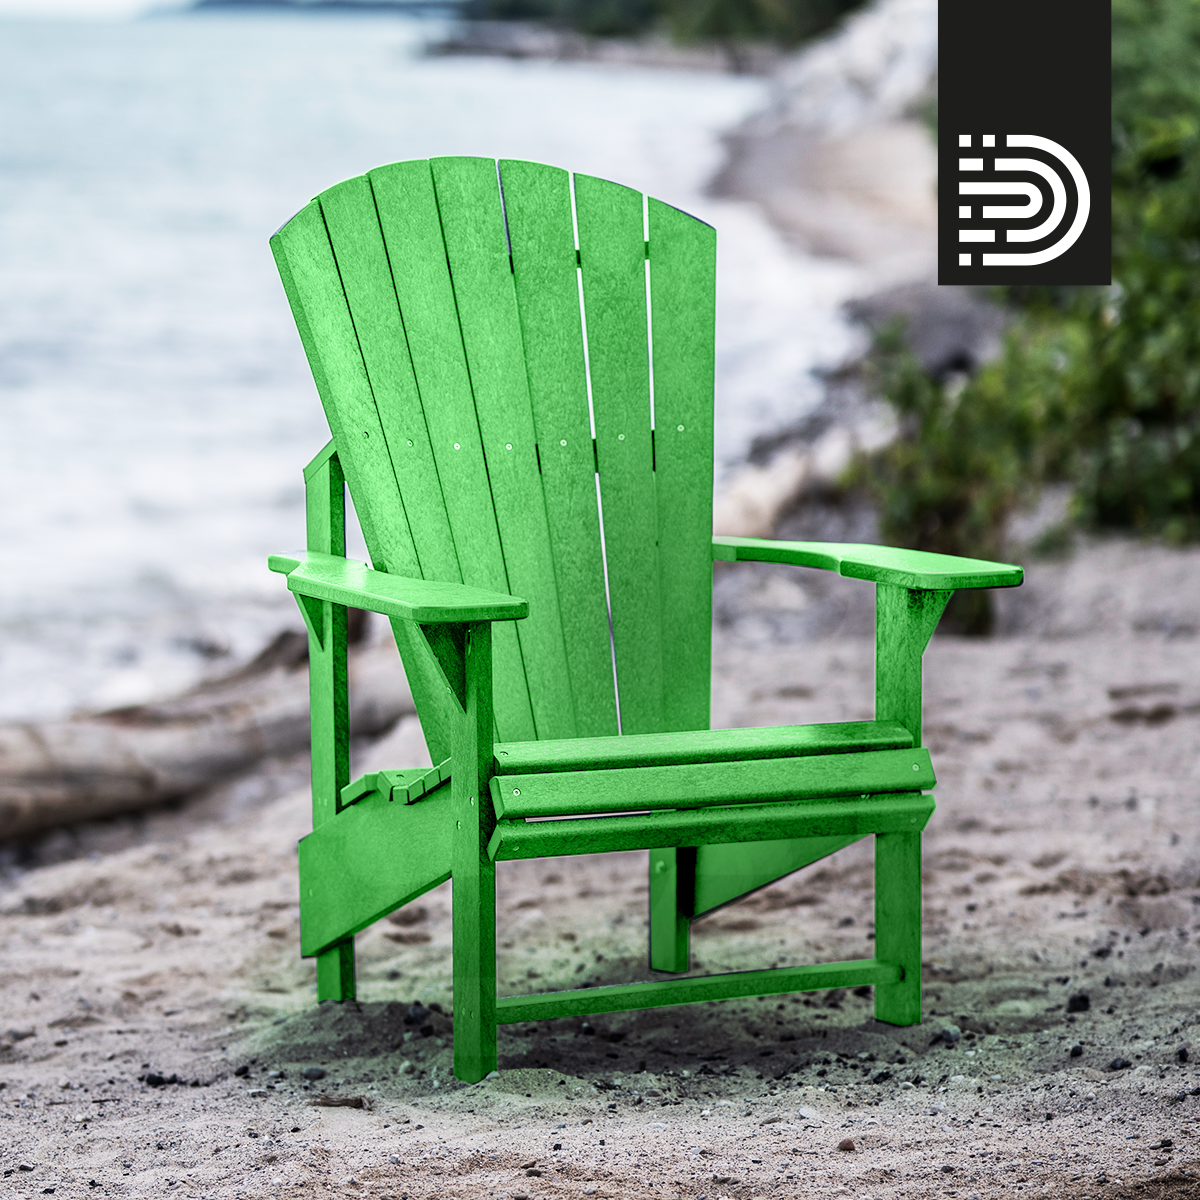 C03 Upright Adirondack Chair -  Kiwi green 17